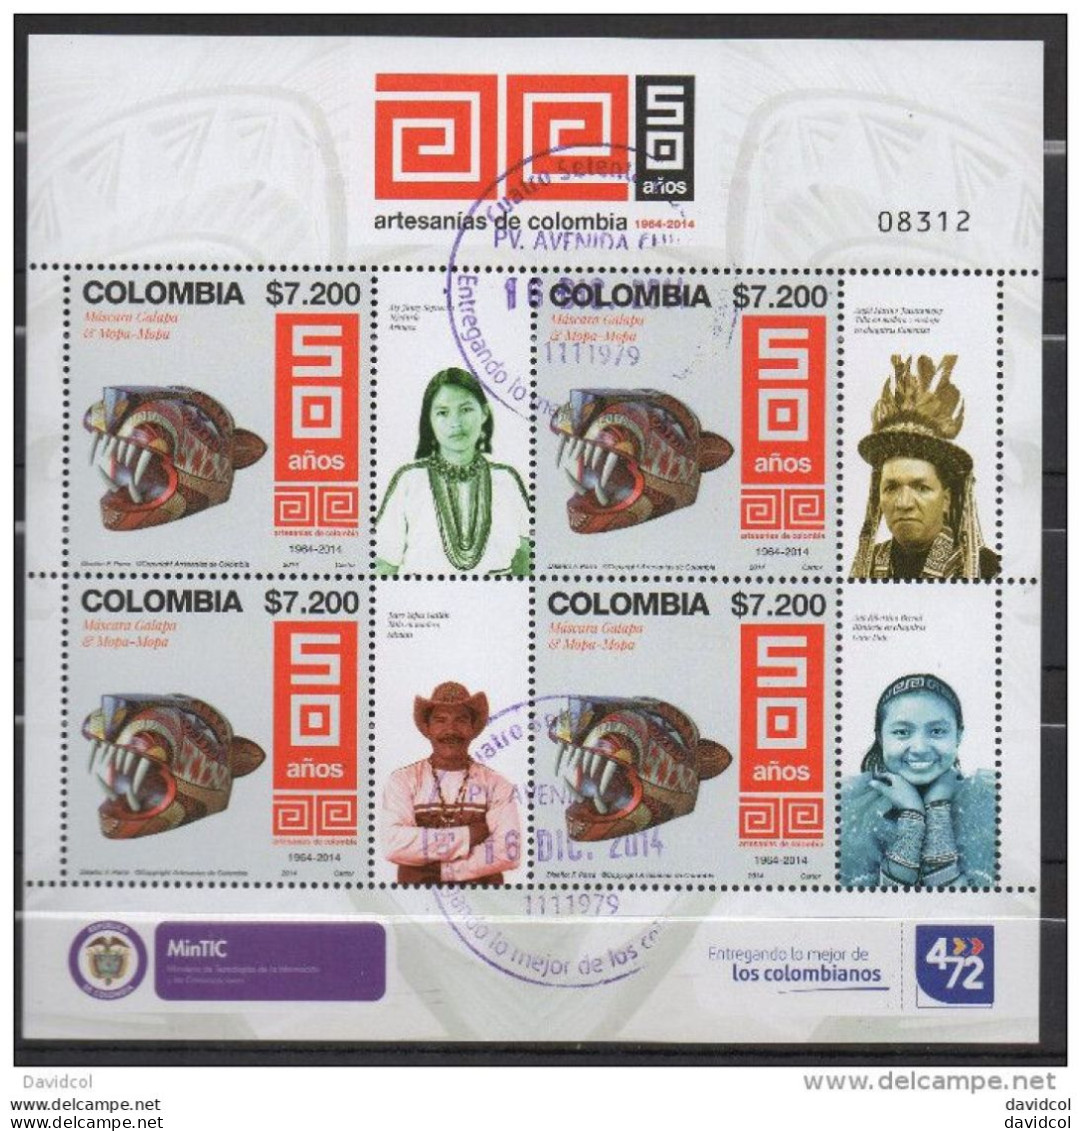 0065B-KOLUMBIEN - 2014 - "ARTESANIAS DE COLOMBIA/ COLOMBIAN HANDCRAFTS". USED SHEET. HIGH FACIAL VALUE - Kolumbien